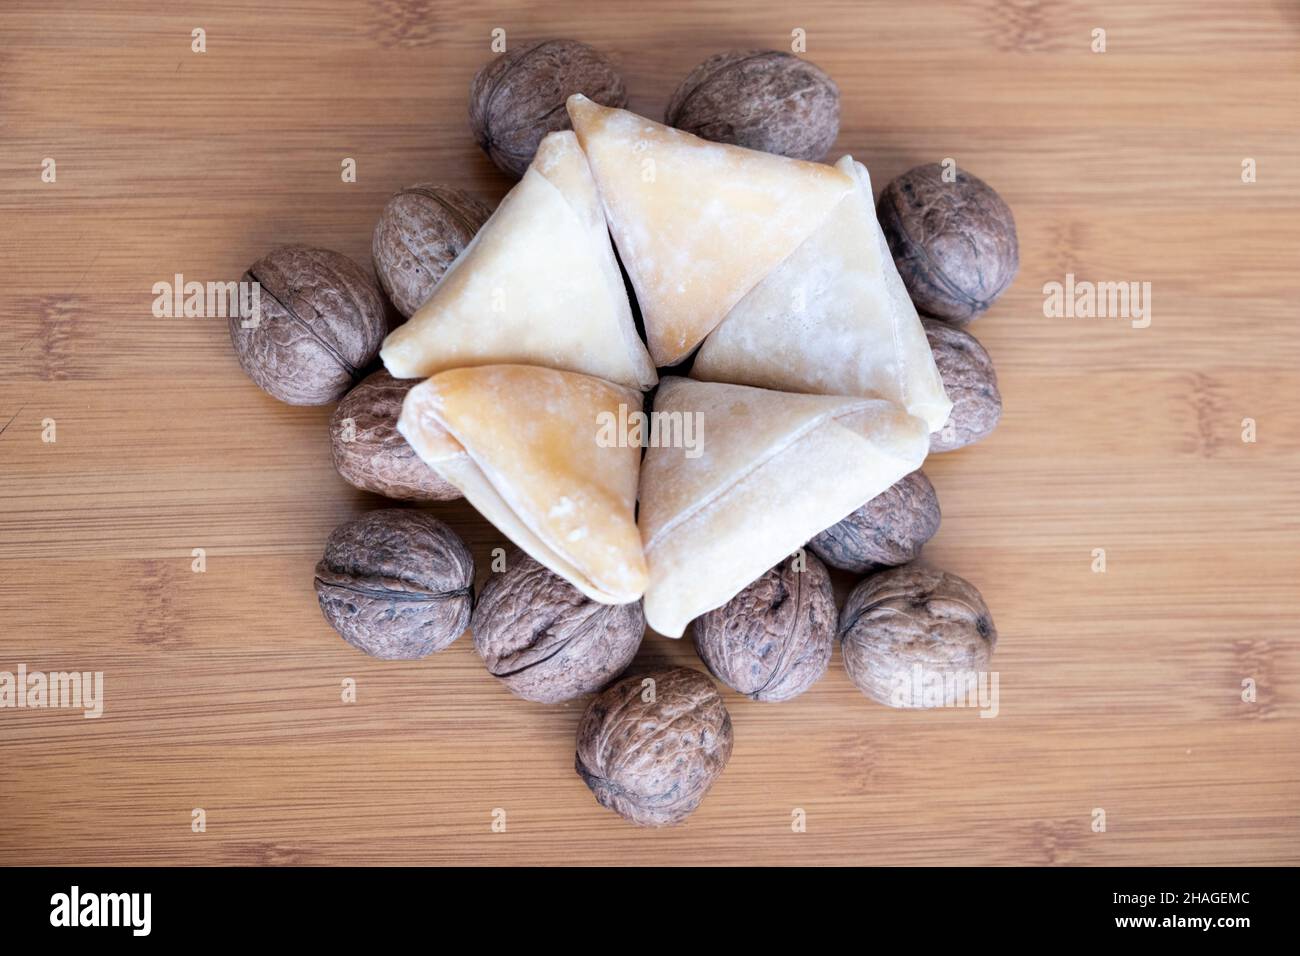 grape pestil, shelled walnut under triangle pentagon dough on wodeen table close-up top shot, turkish pestil, healthy snack Stock Photo